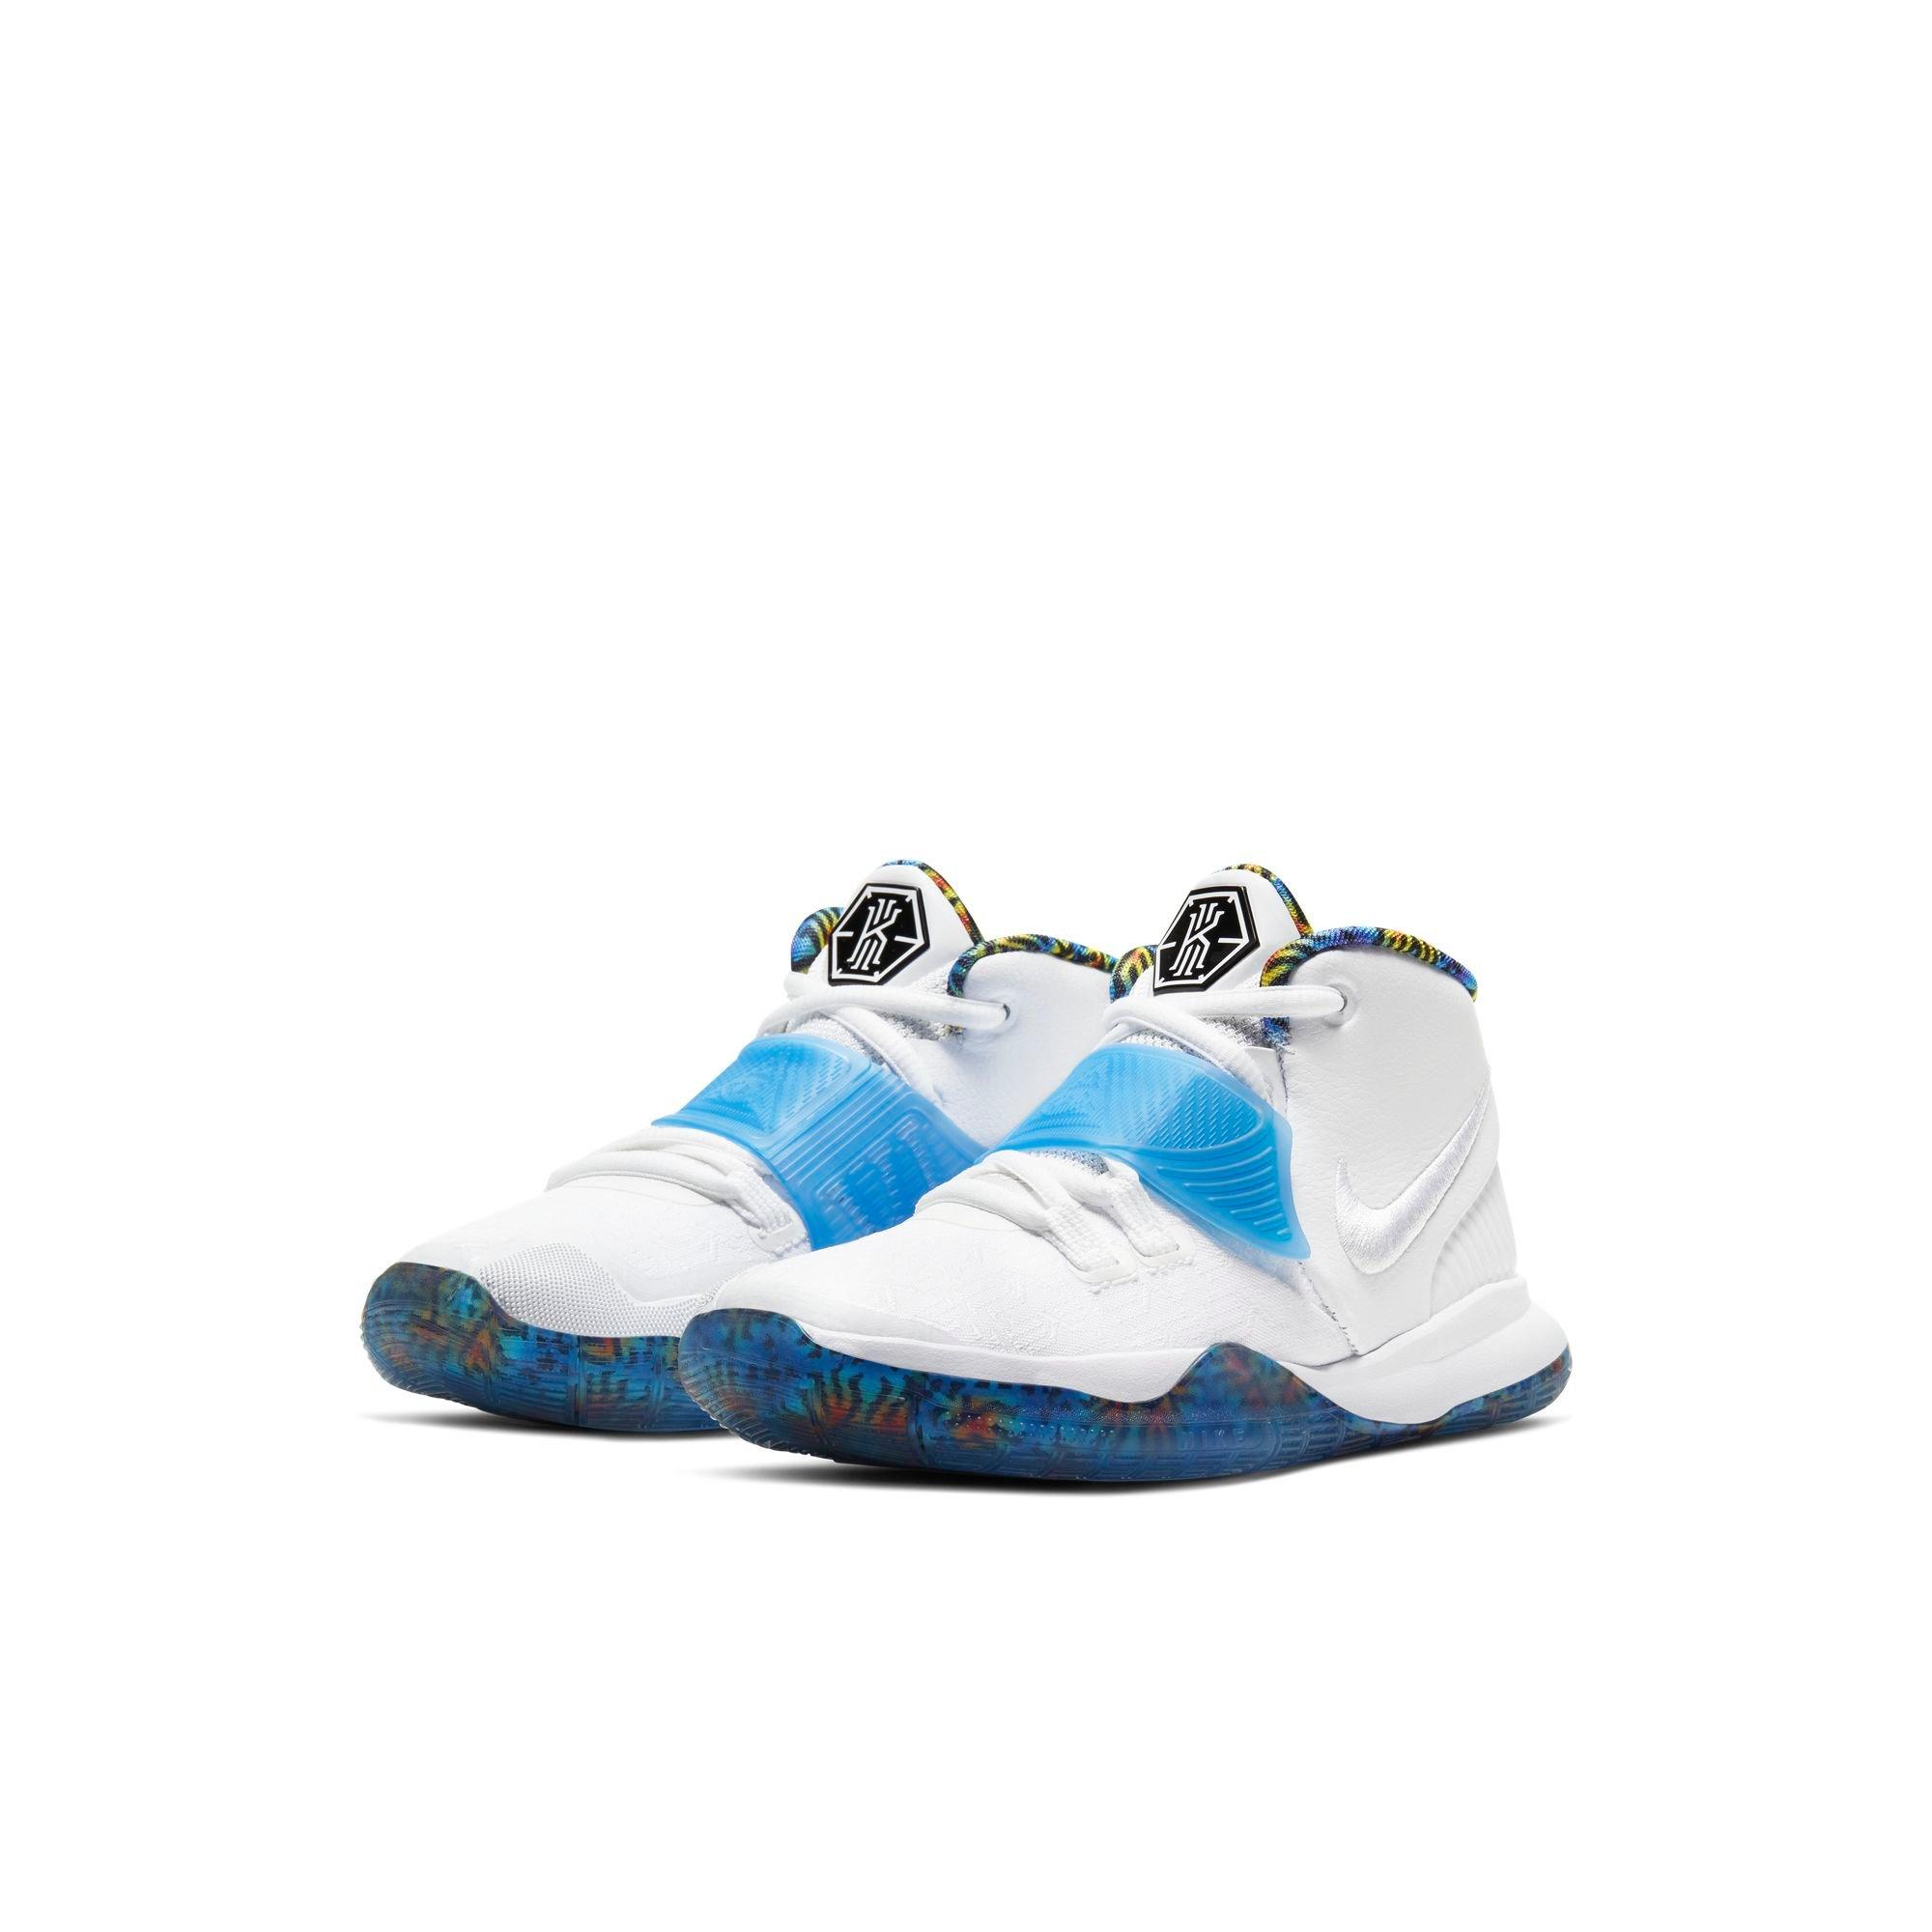 Nike Kyrie 6 Mens Basketball ShoesBq4630 300 Amazon.com